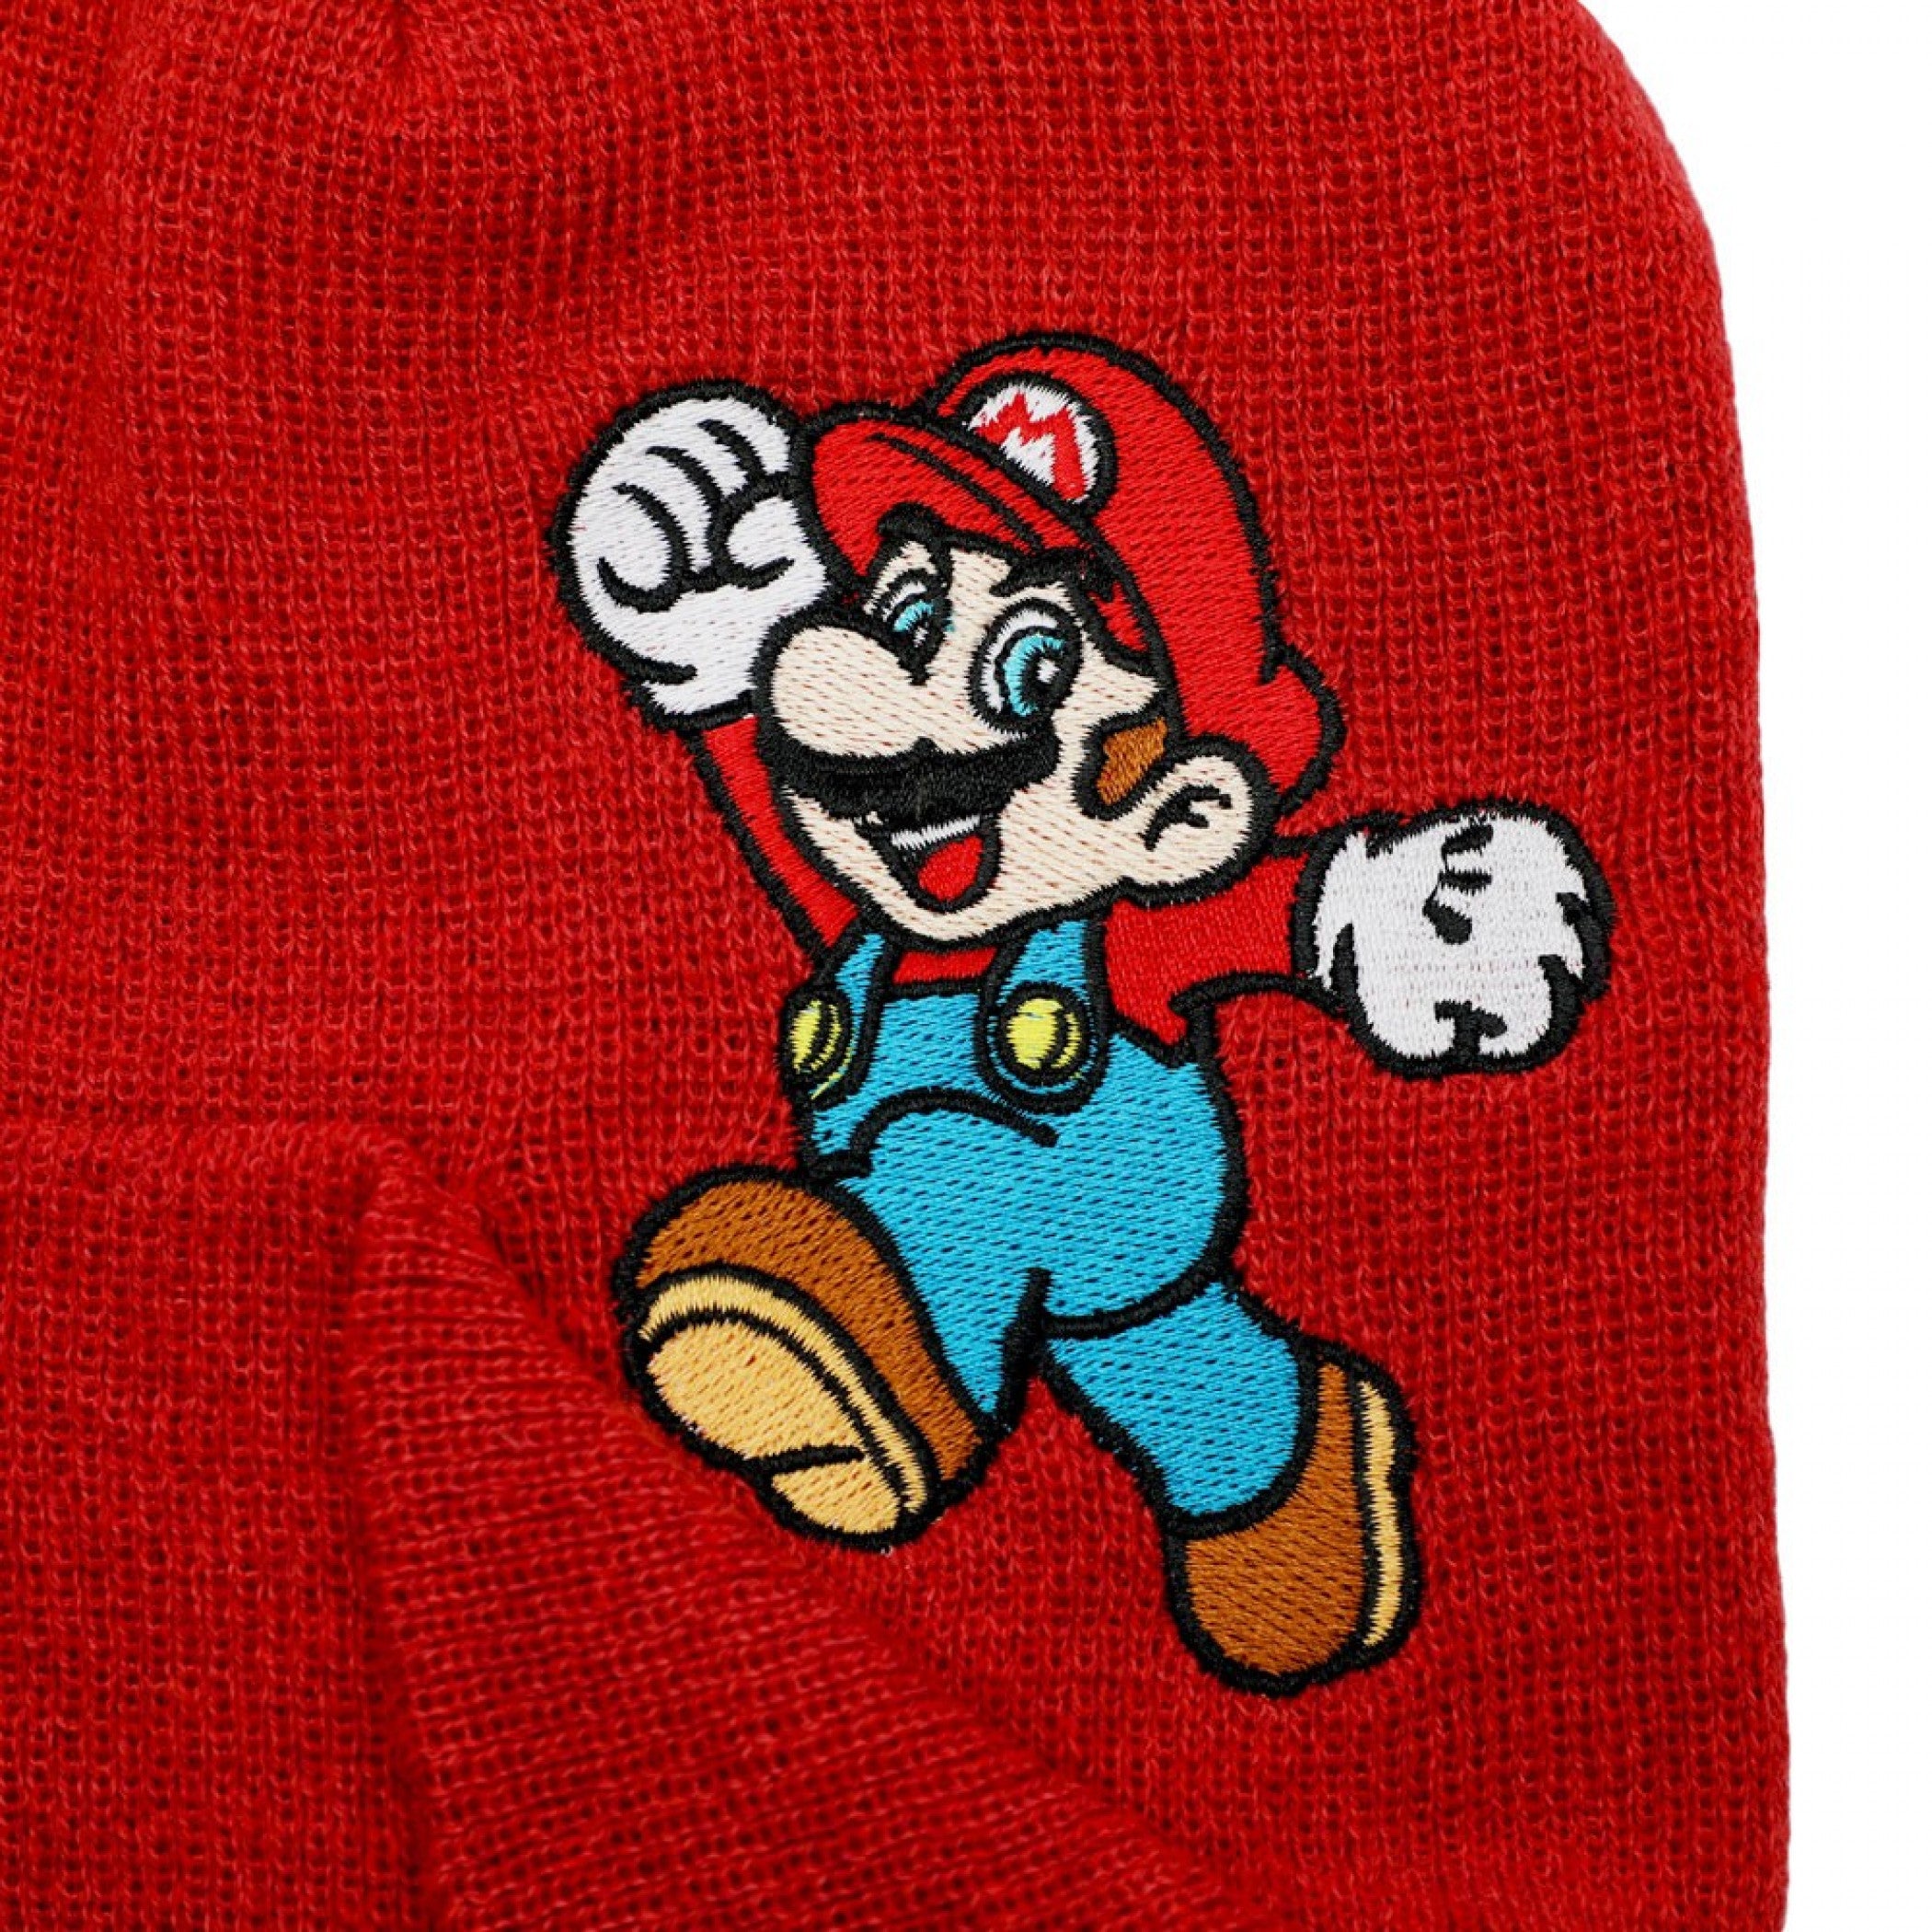 Super Mario Bros. Nintendo Mario Peek-A-Boo Beanie